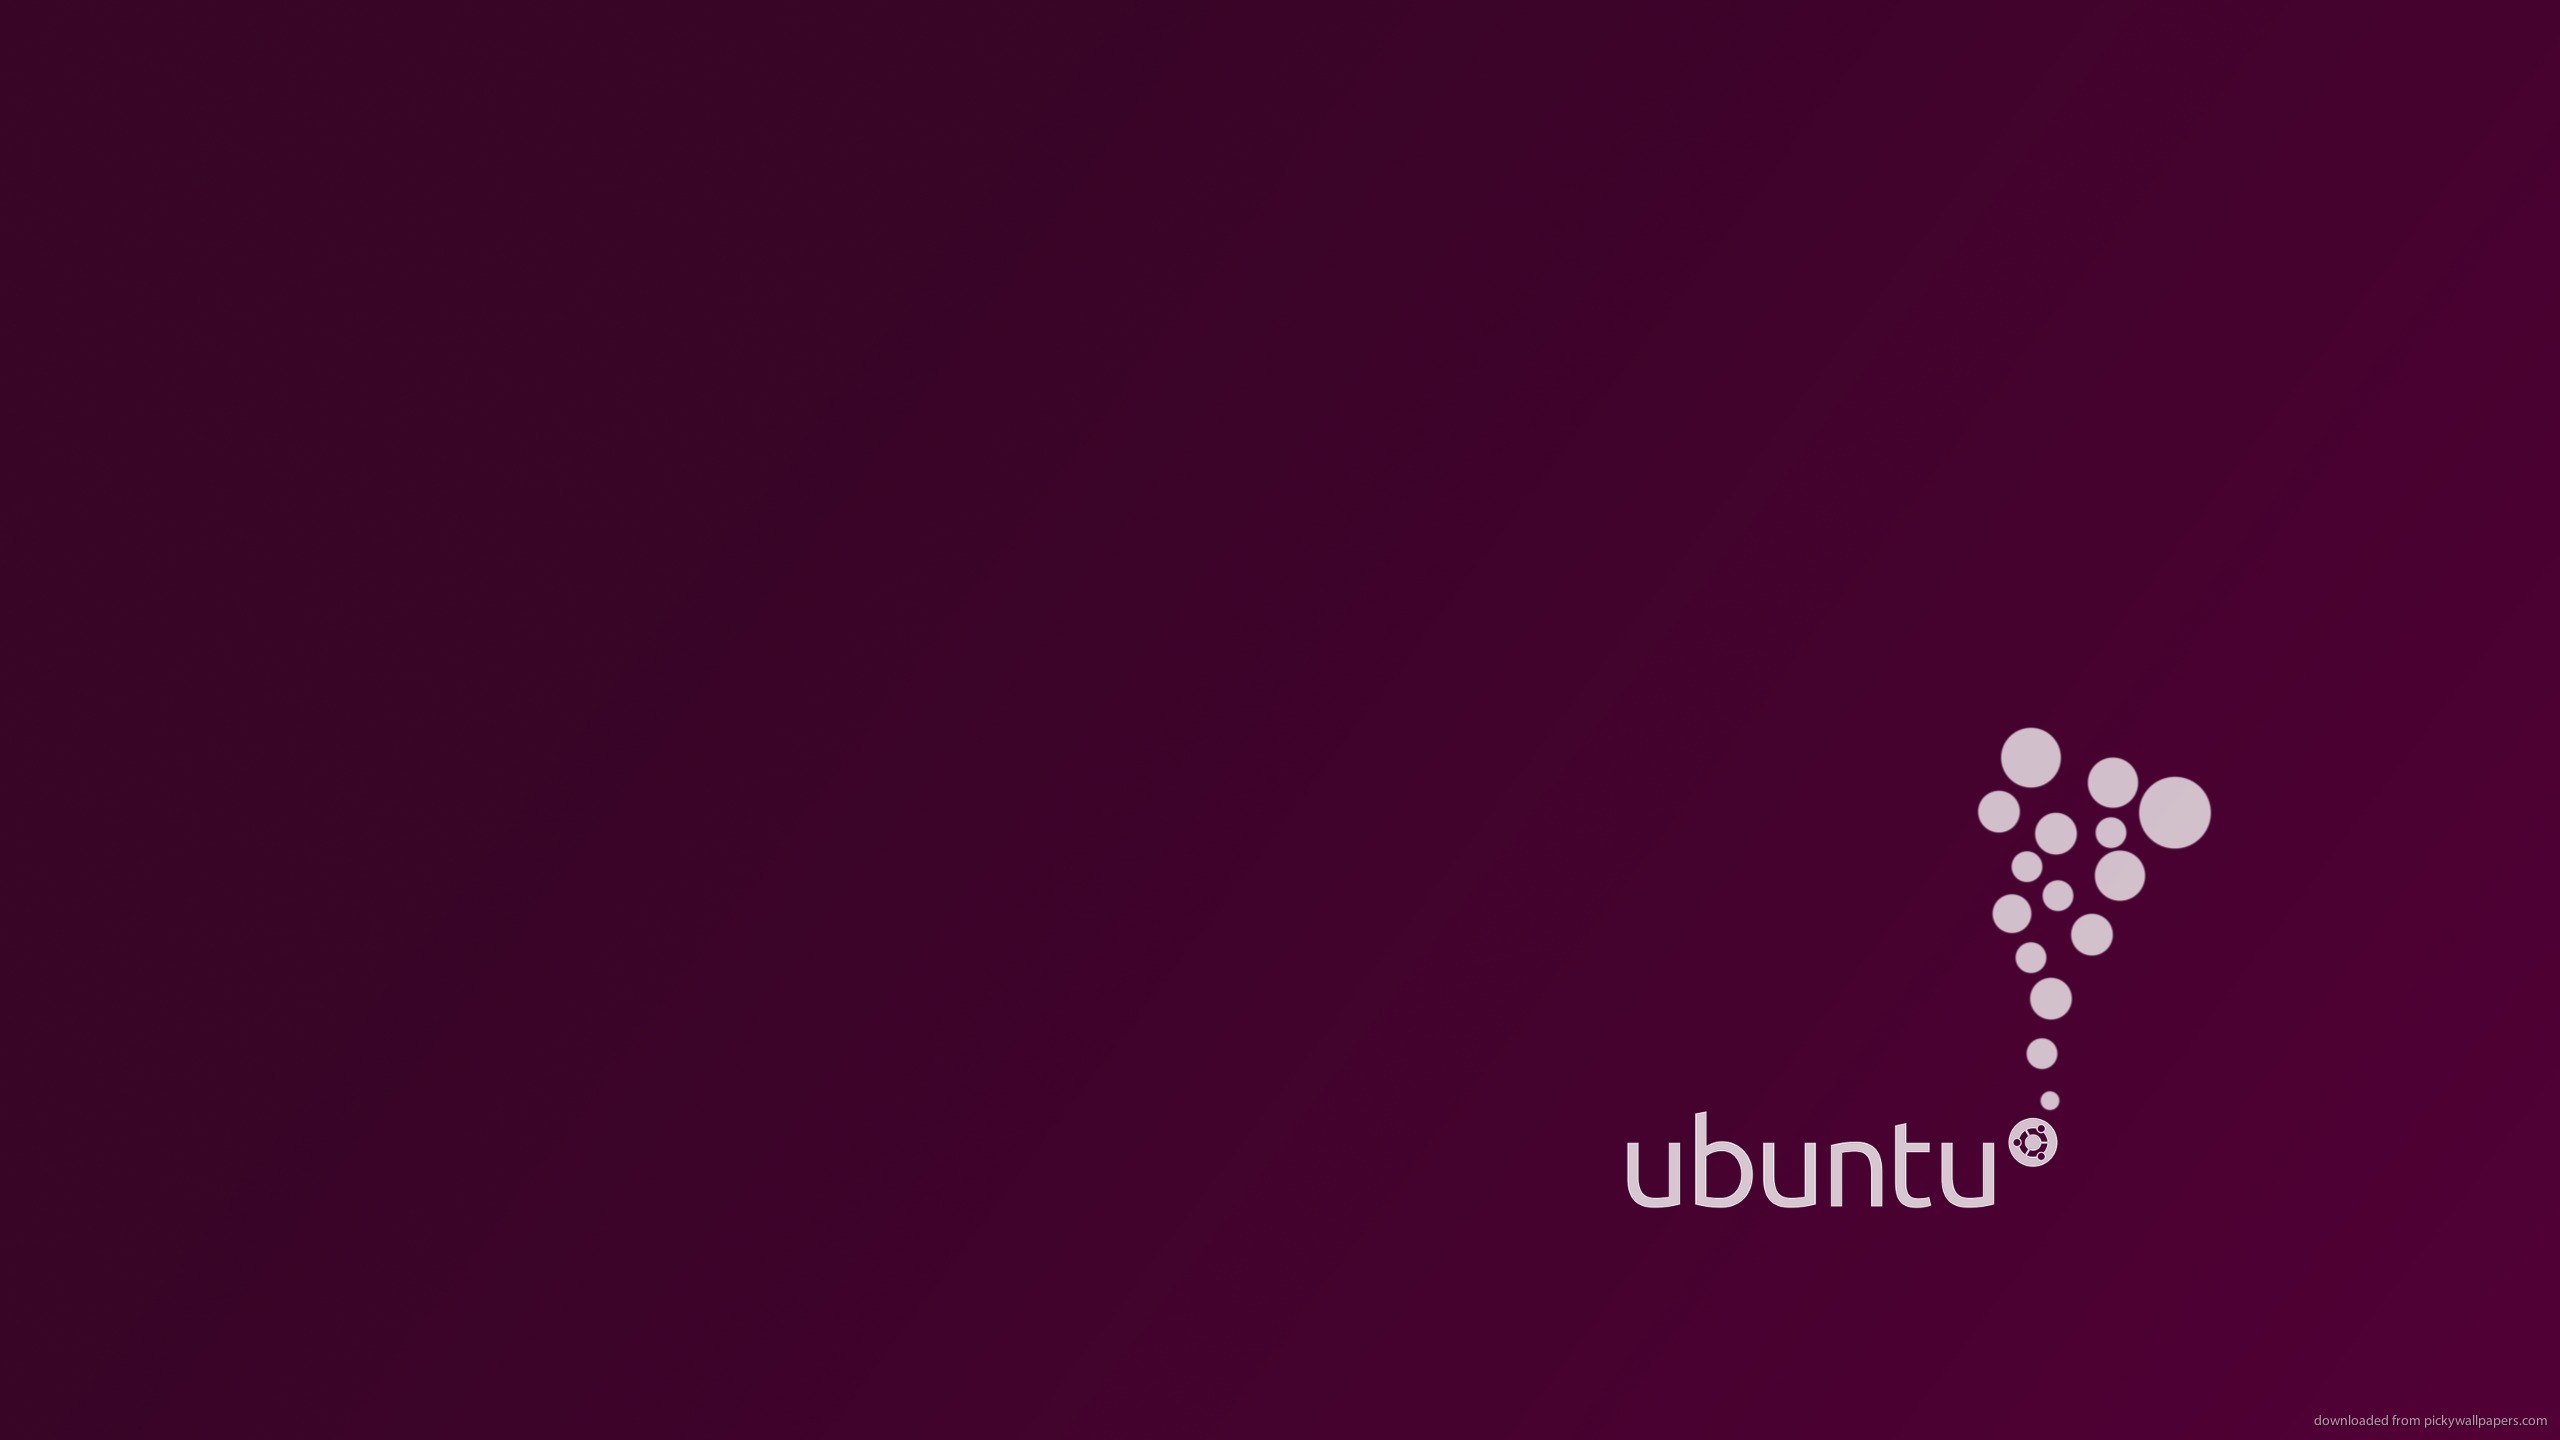 Ubuntu 1366x768 wallpapers HD   458996 2560x1440